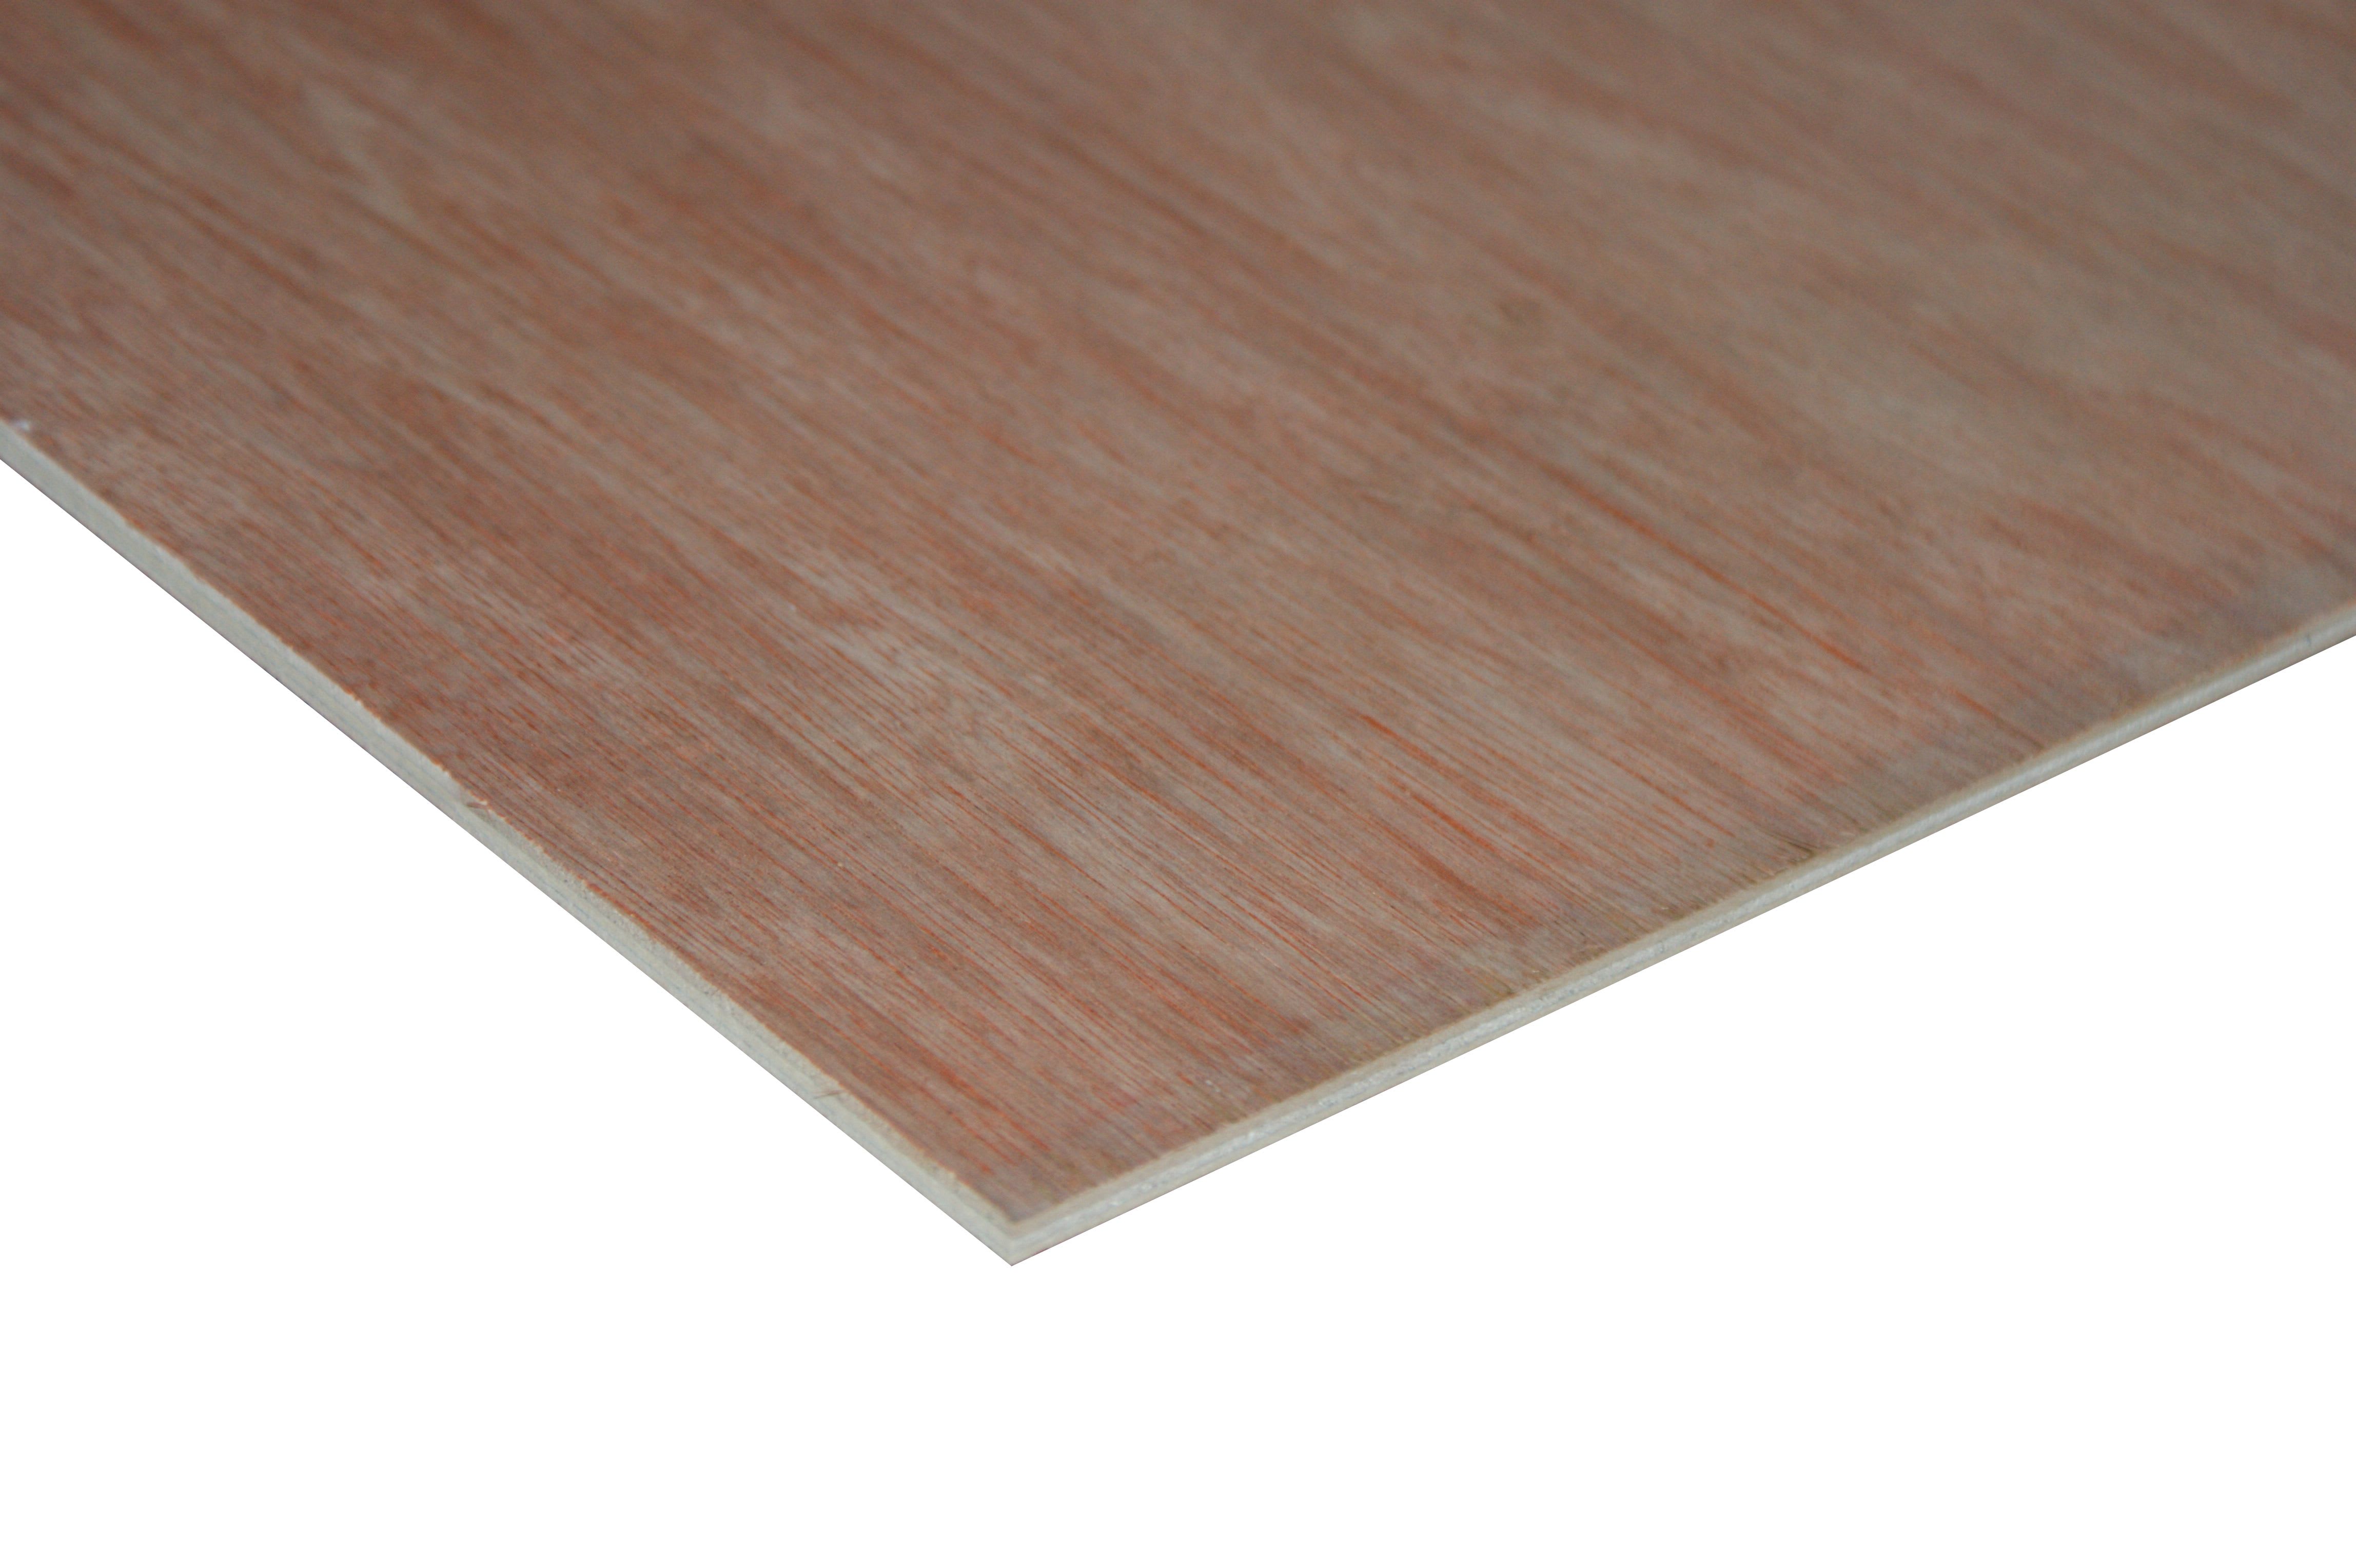 Non-Structural Hardwood Plywood Sheet - 5.5 x 607